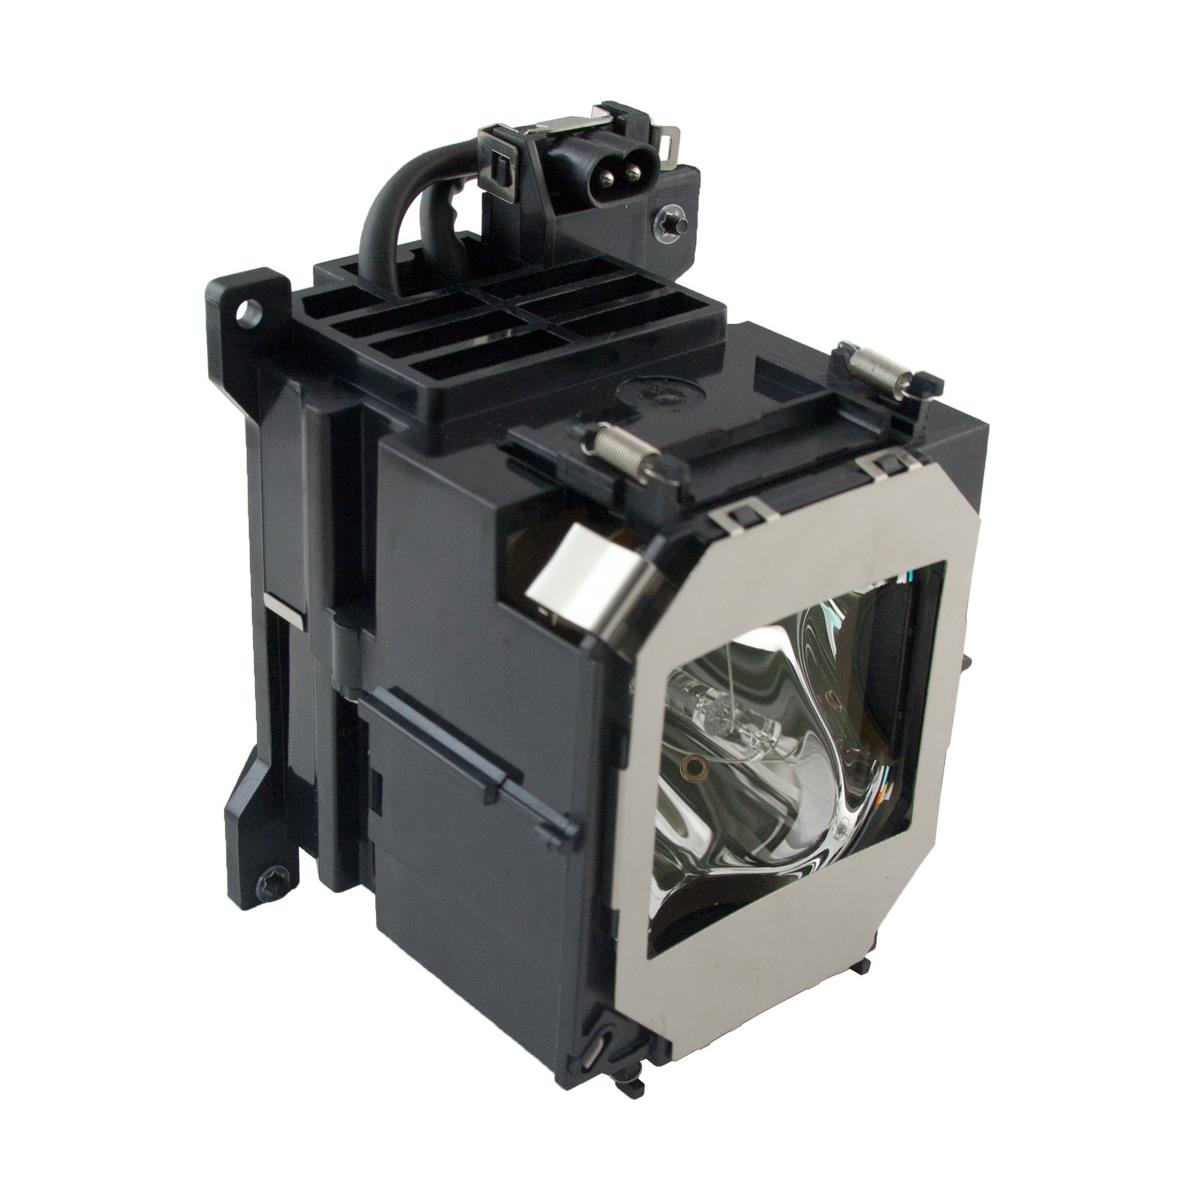 Image of Yamaha PJL-520 Lamp Cartridge for LPX-510 LCD Projectors